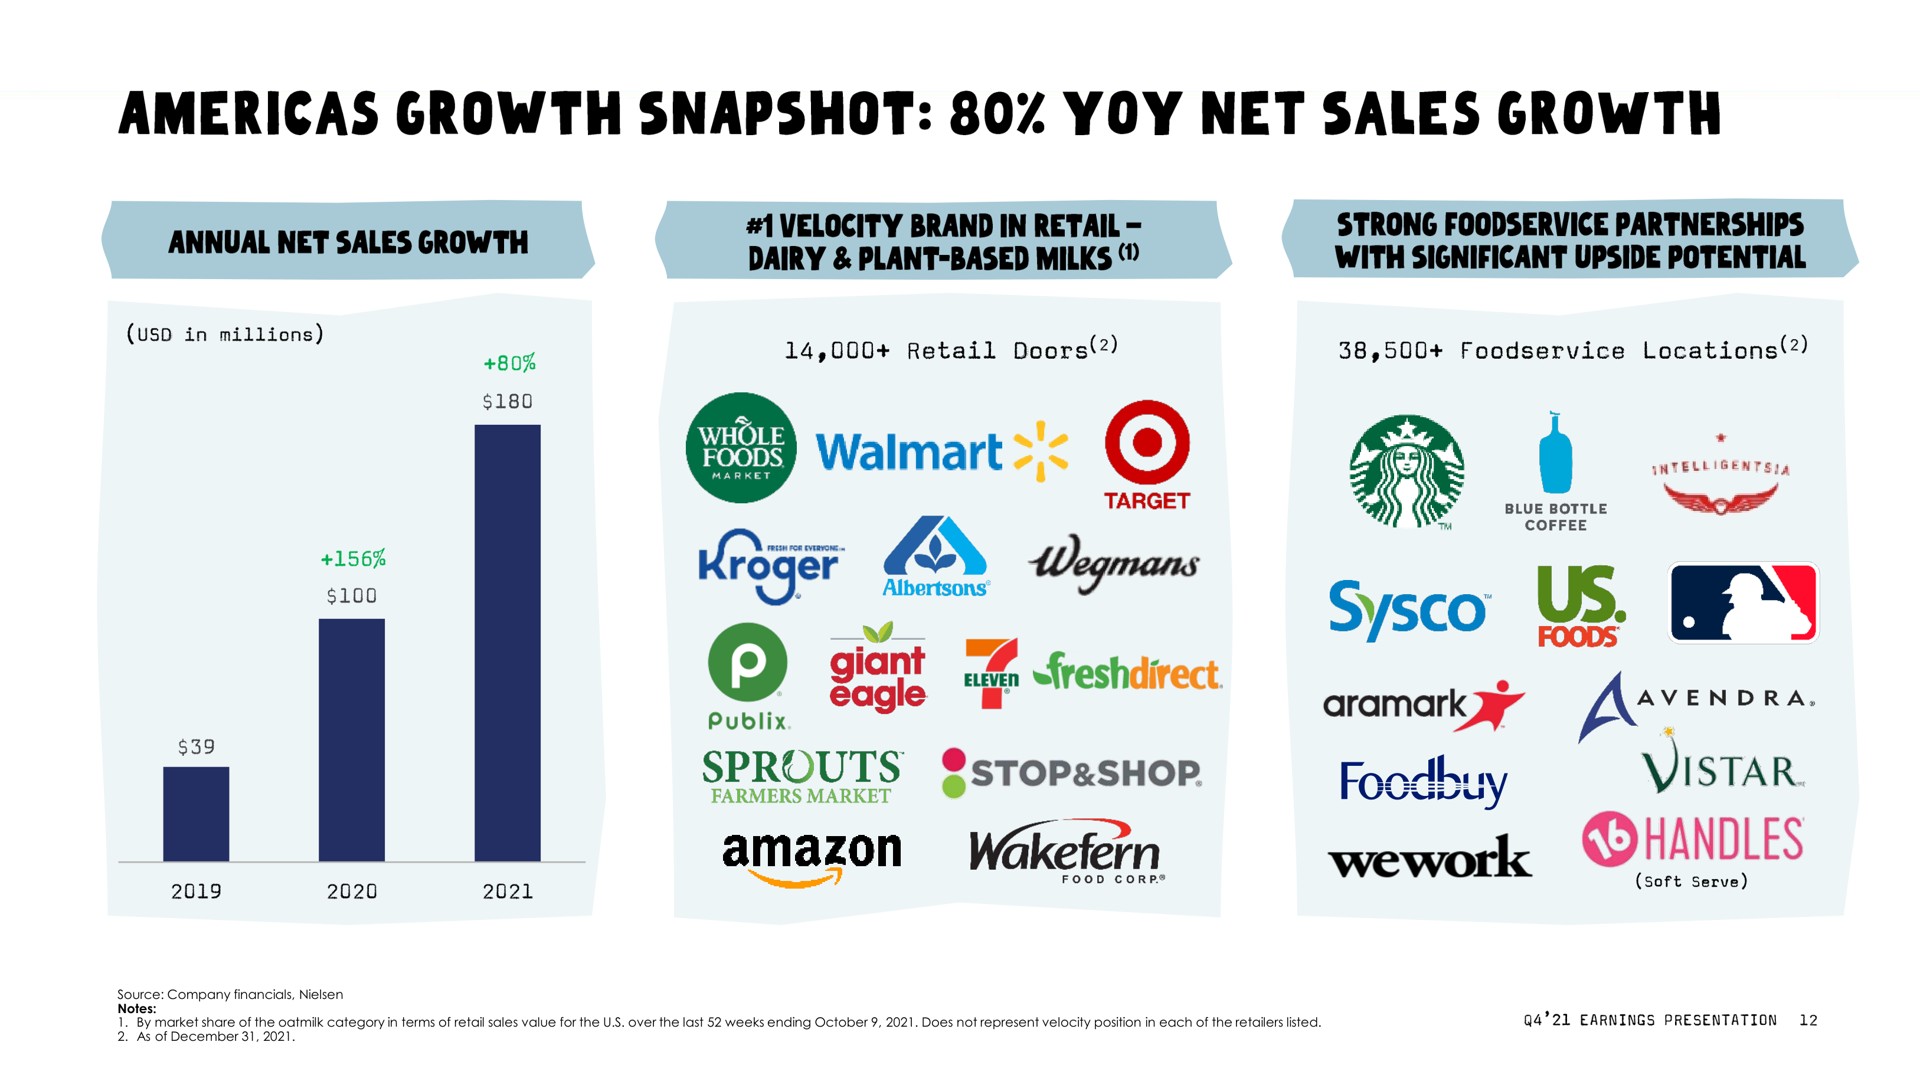 growth snapshot yoy net sales growth us handles | Oatly